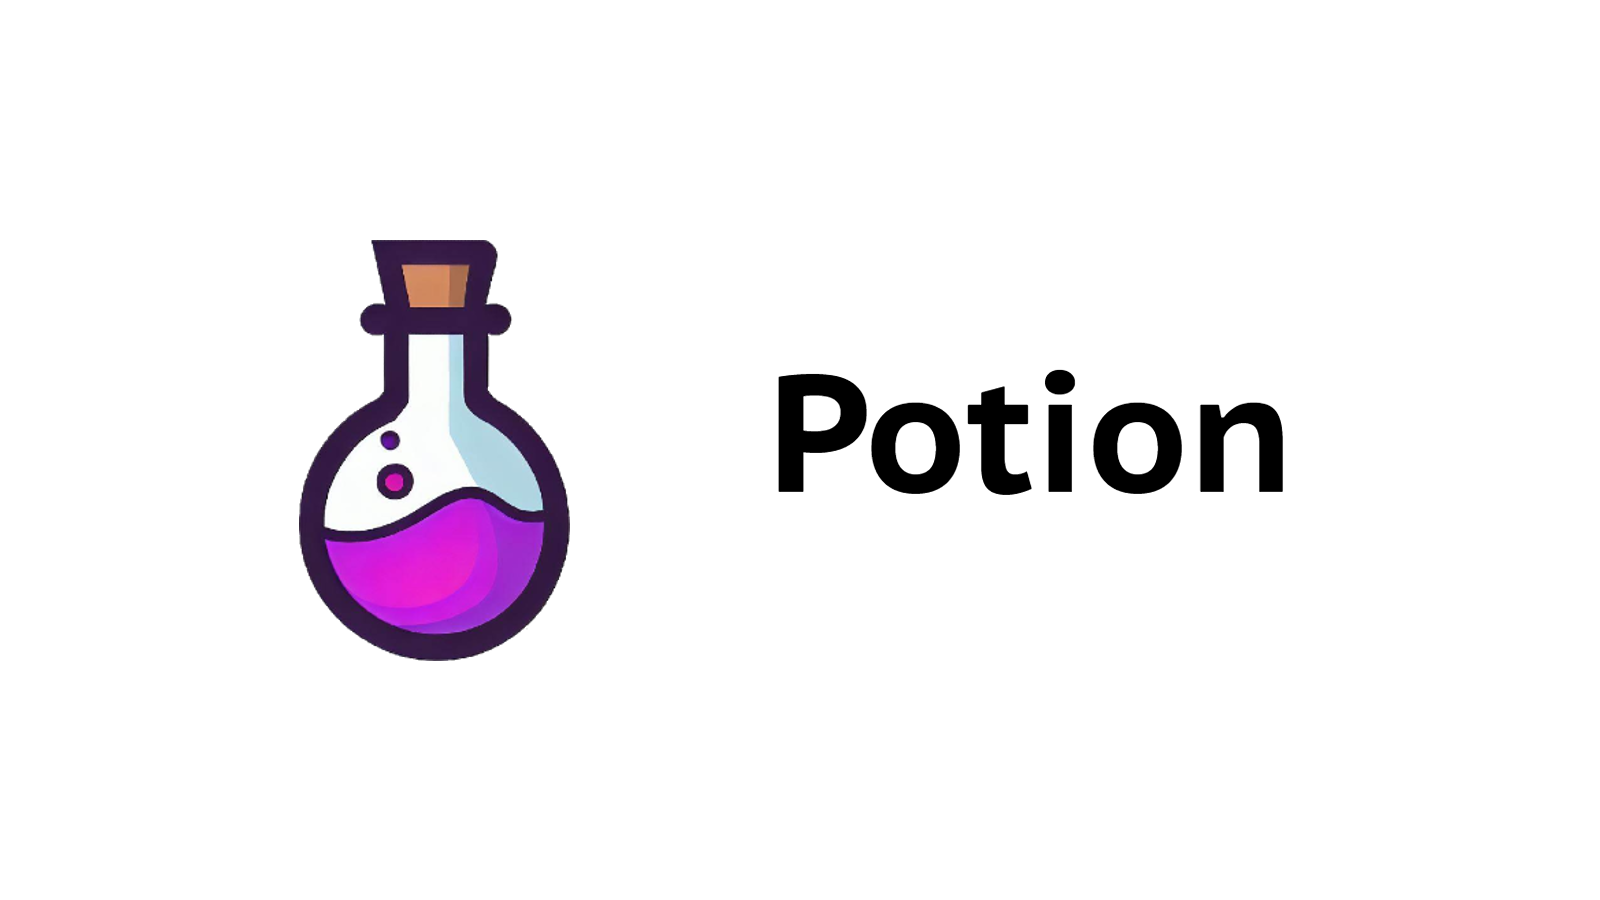 The potion logo